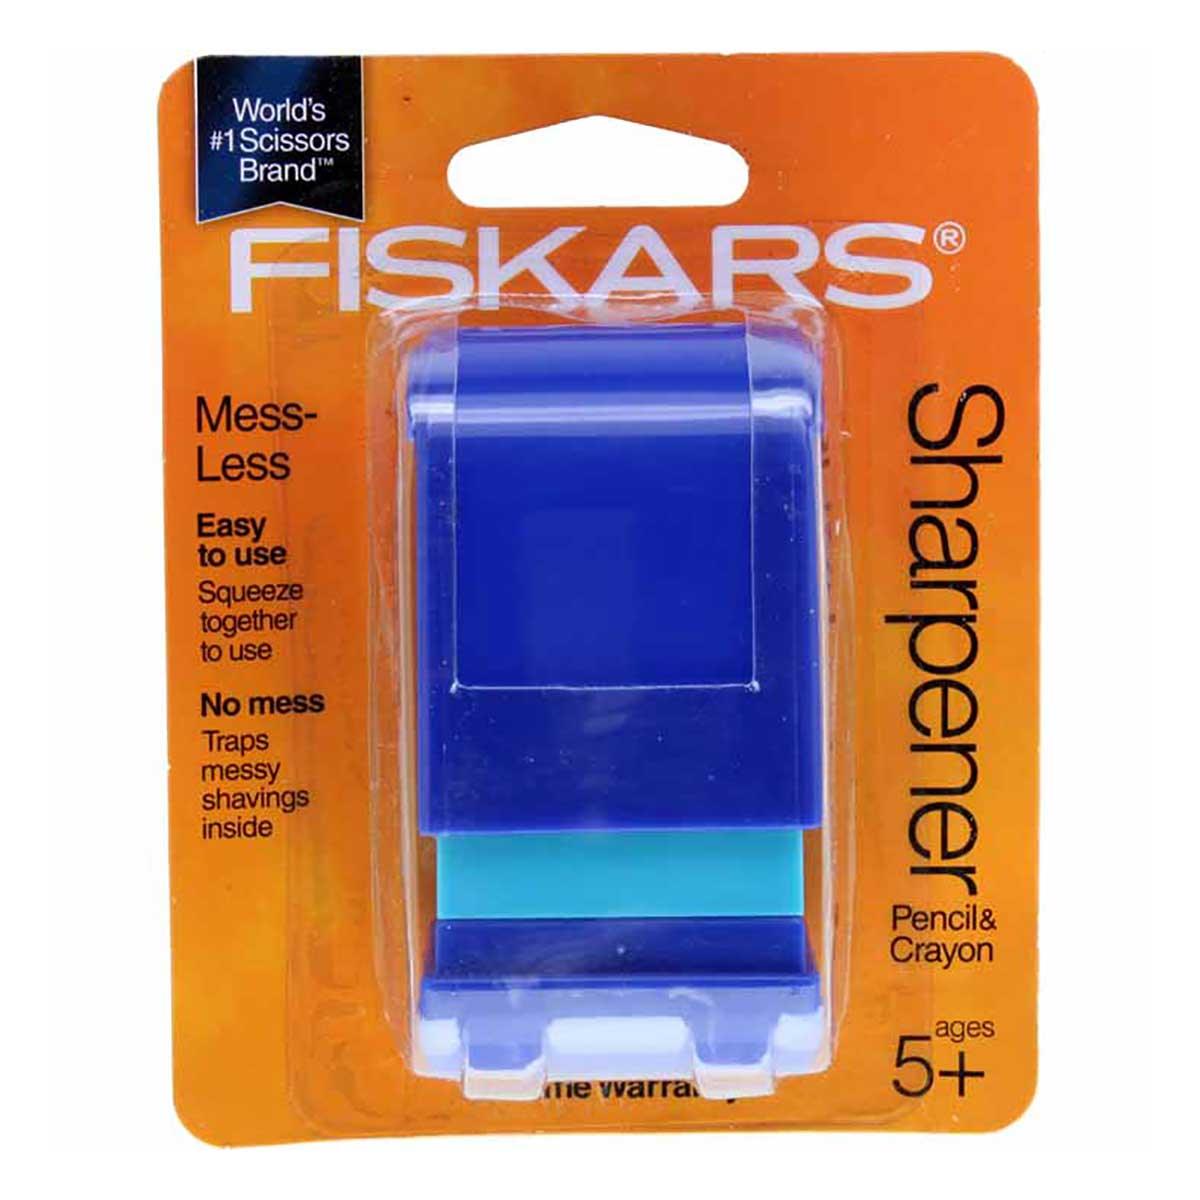 Fiskars Designer Flip Sharpener - Assorted Colors